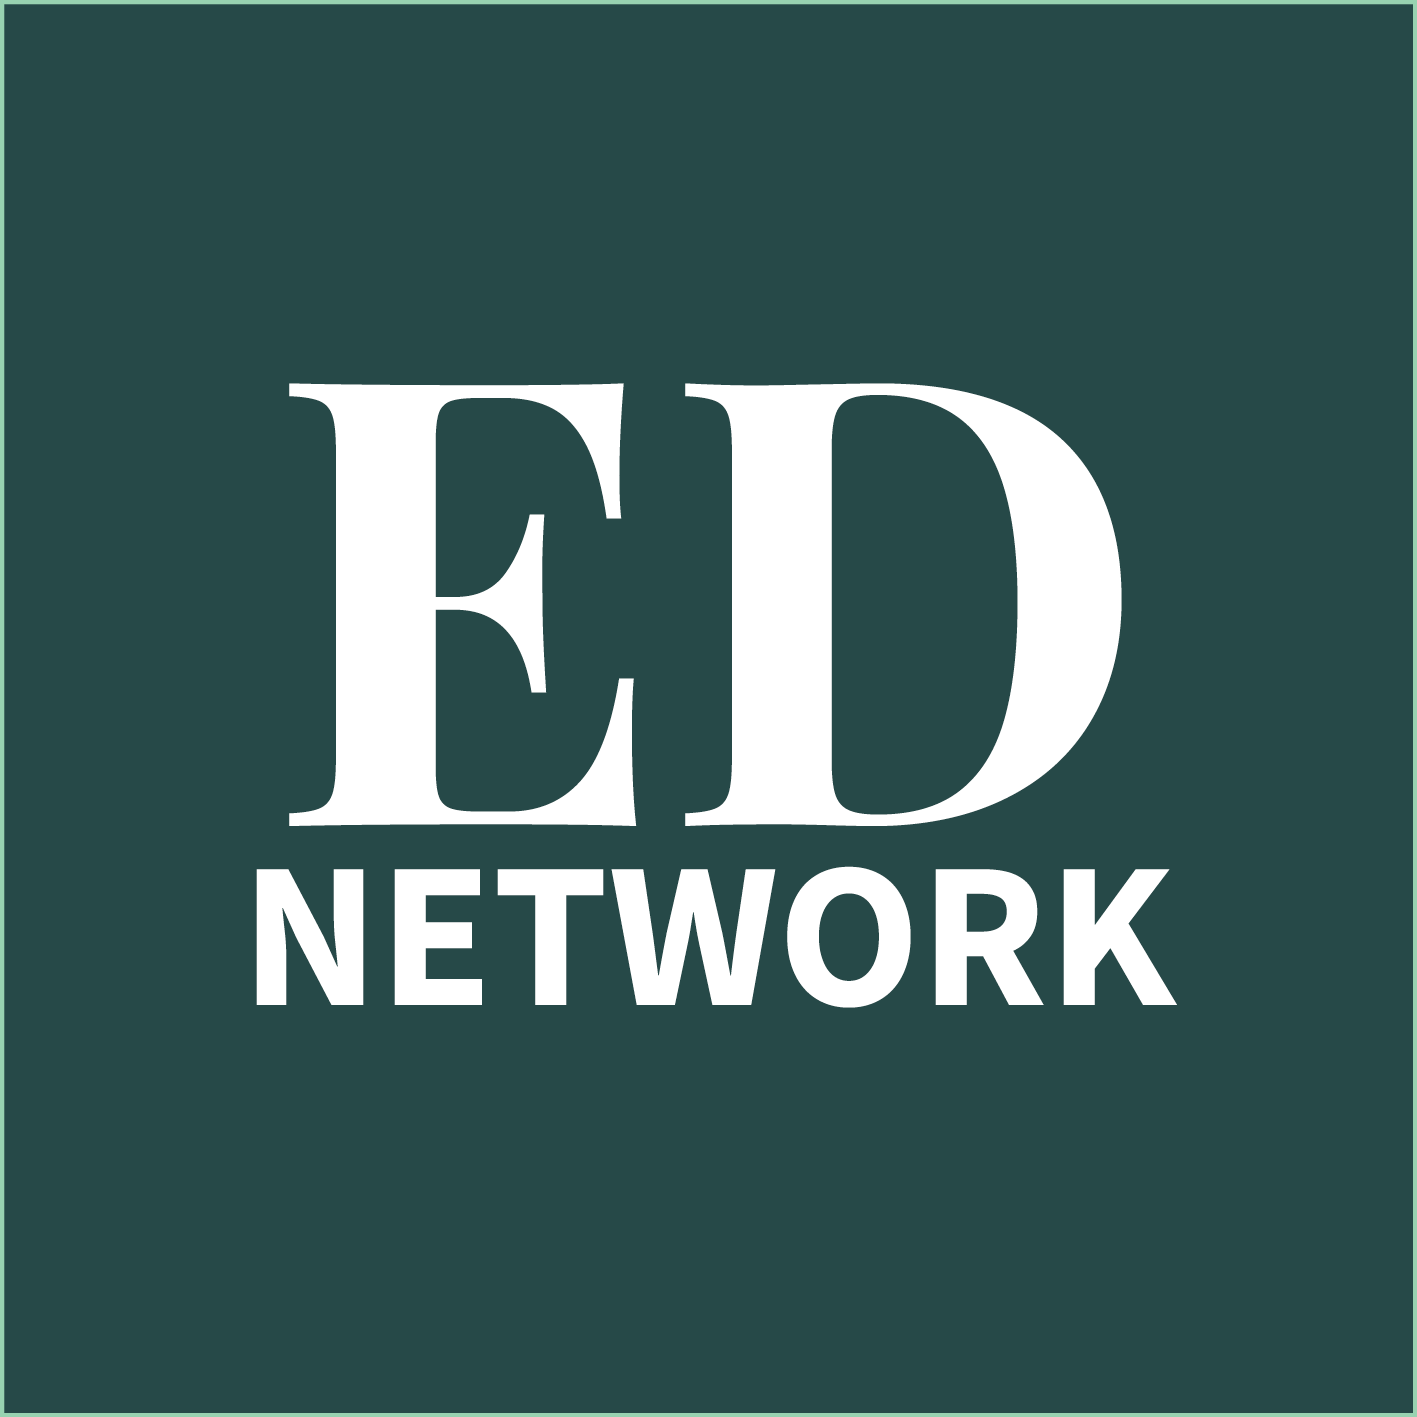 Ethical Design Network logo